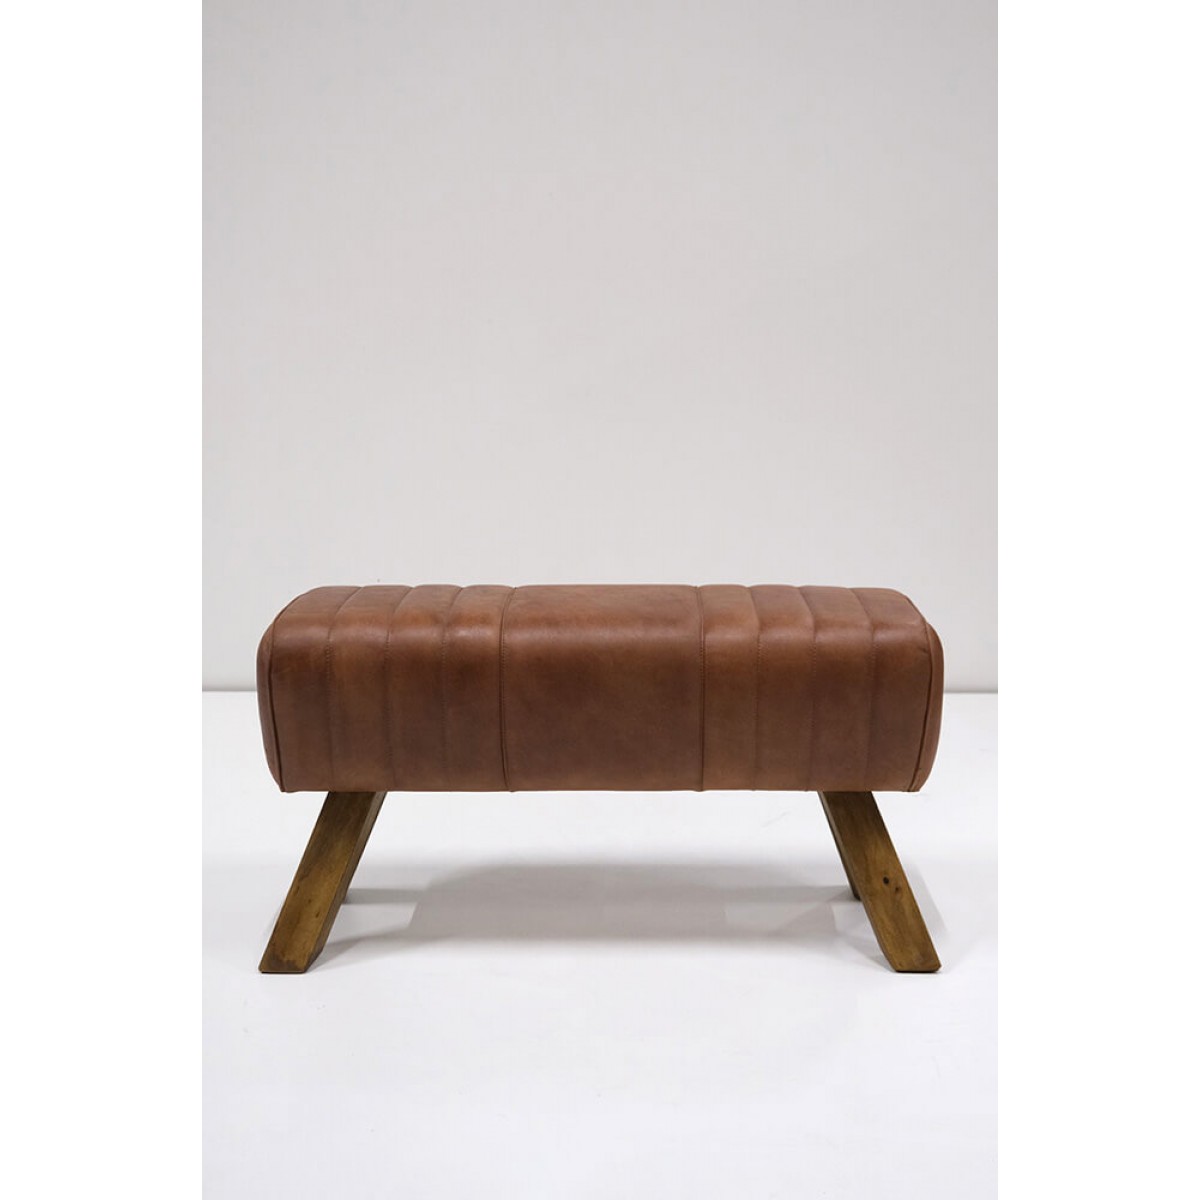 Wilma ξύλινος πάγκος με καφέ δερμάτινη επένδυση στο κάθισμα 88x29x48 εκ